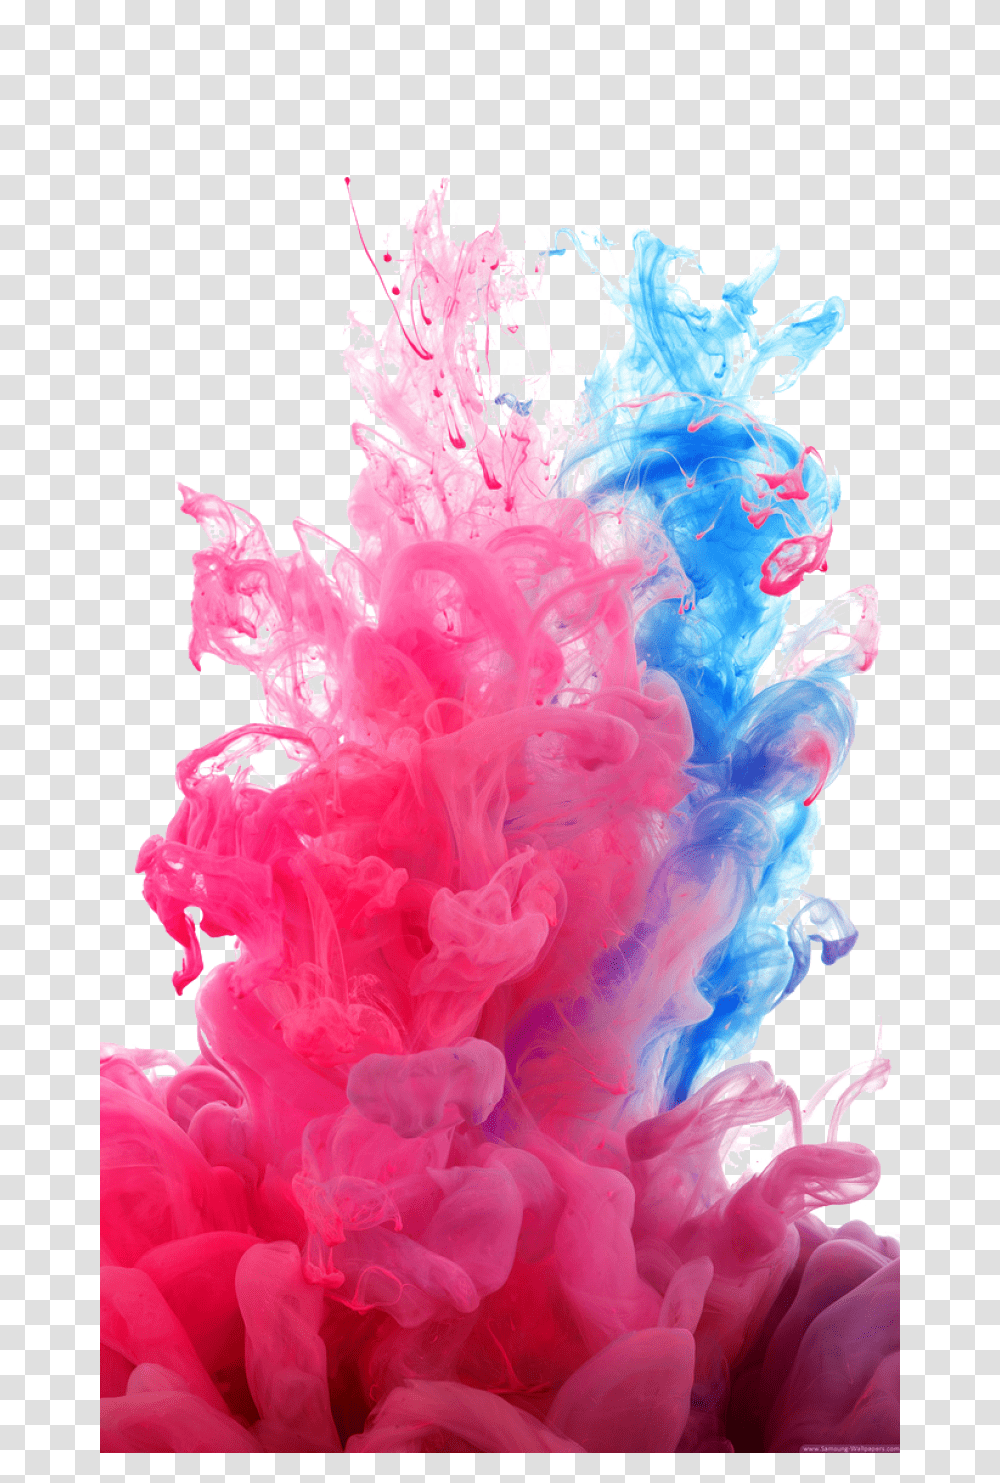 Download Colorful Smoke Image For Free Fondos De Pantalla De Lg, Graphics, Art, Plant, Flower Transparent Png